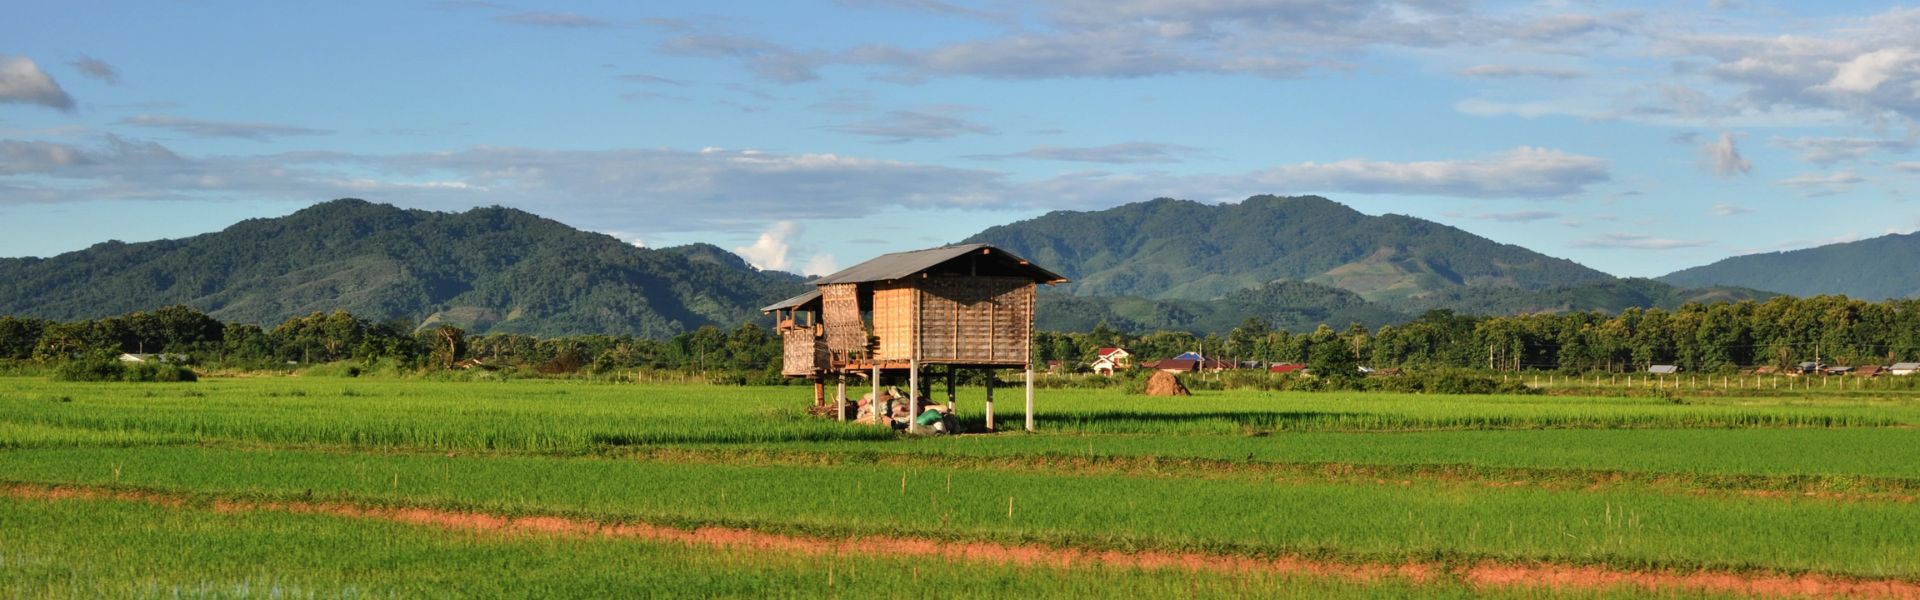 Luang Namtha - Consejos de viaje | Guía de viajes a Laos